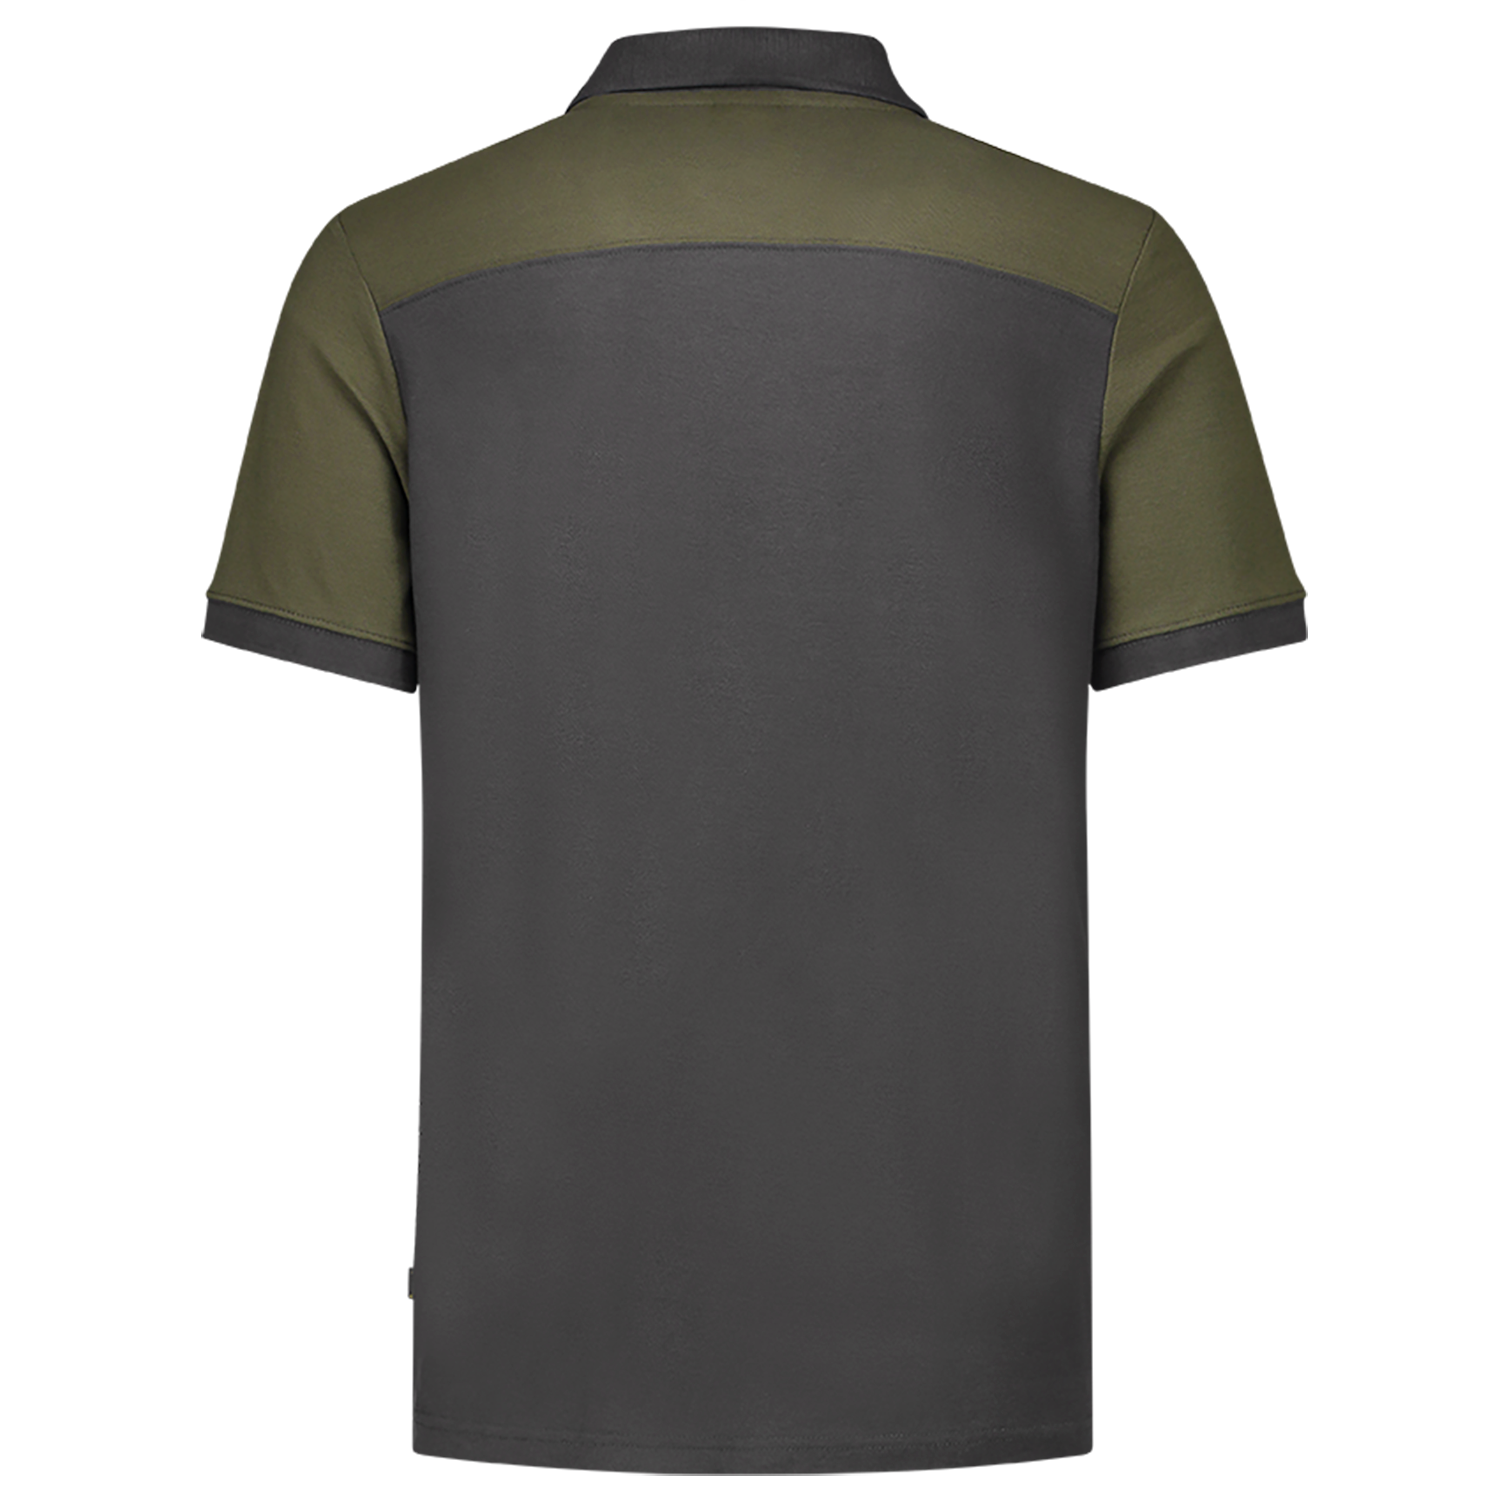 Polo shirt, two-tone cross seam